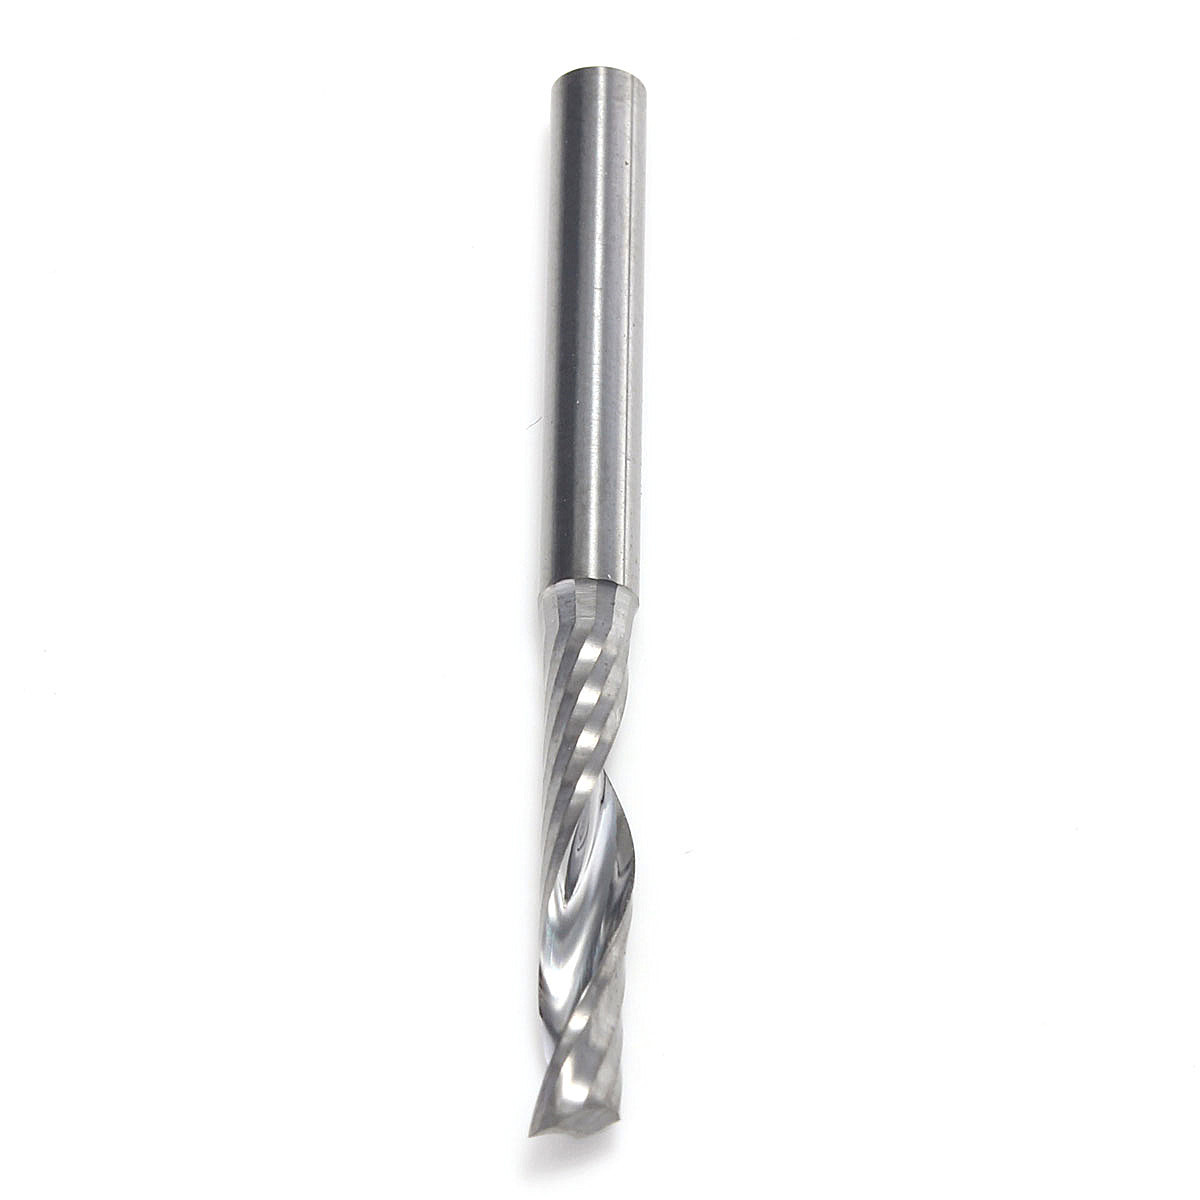 18-Inch-Shank-Single-Flute-End-Mill-Cutter-3175x17mm-Tungsten-Steel-CNC-Router-Bit-1038972-5